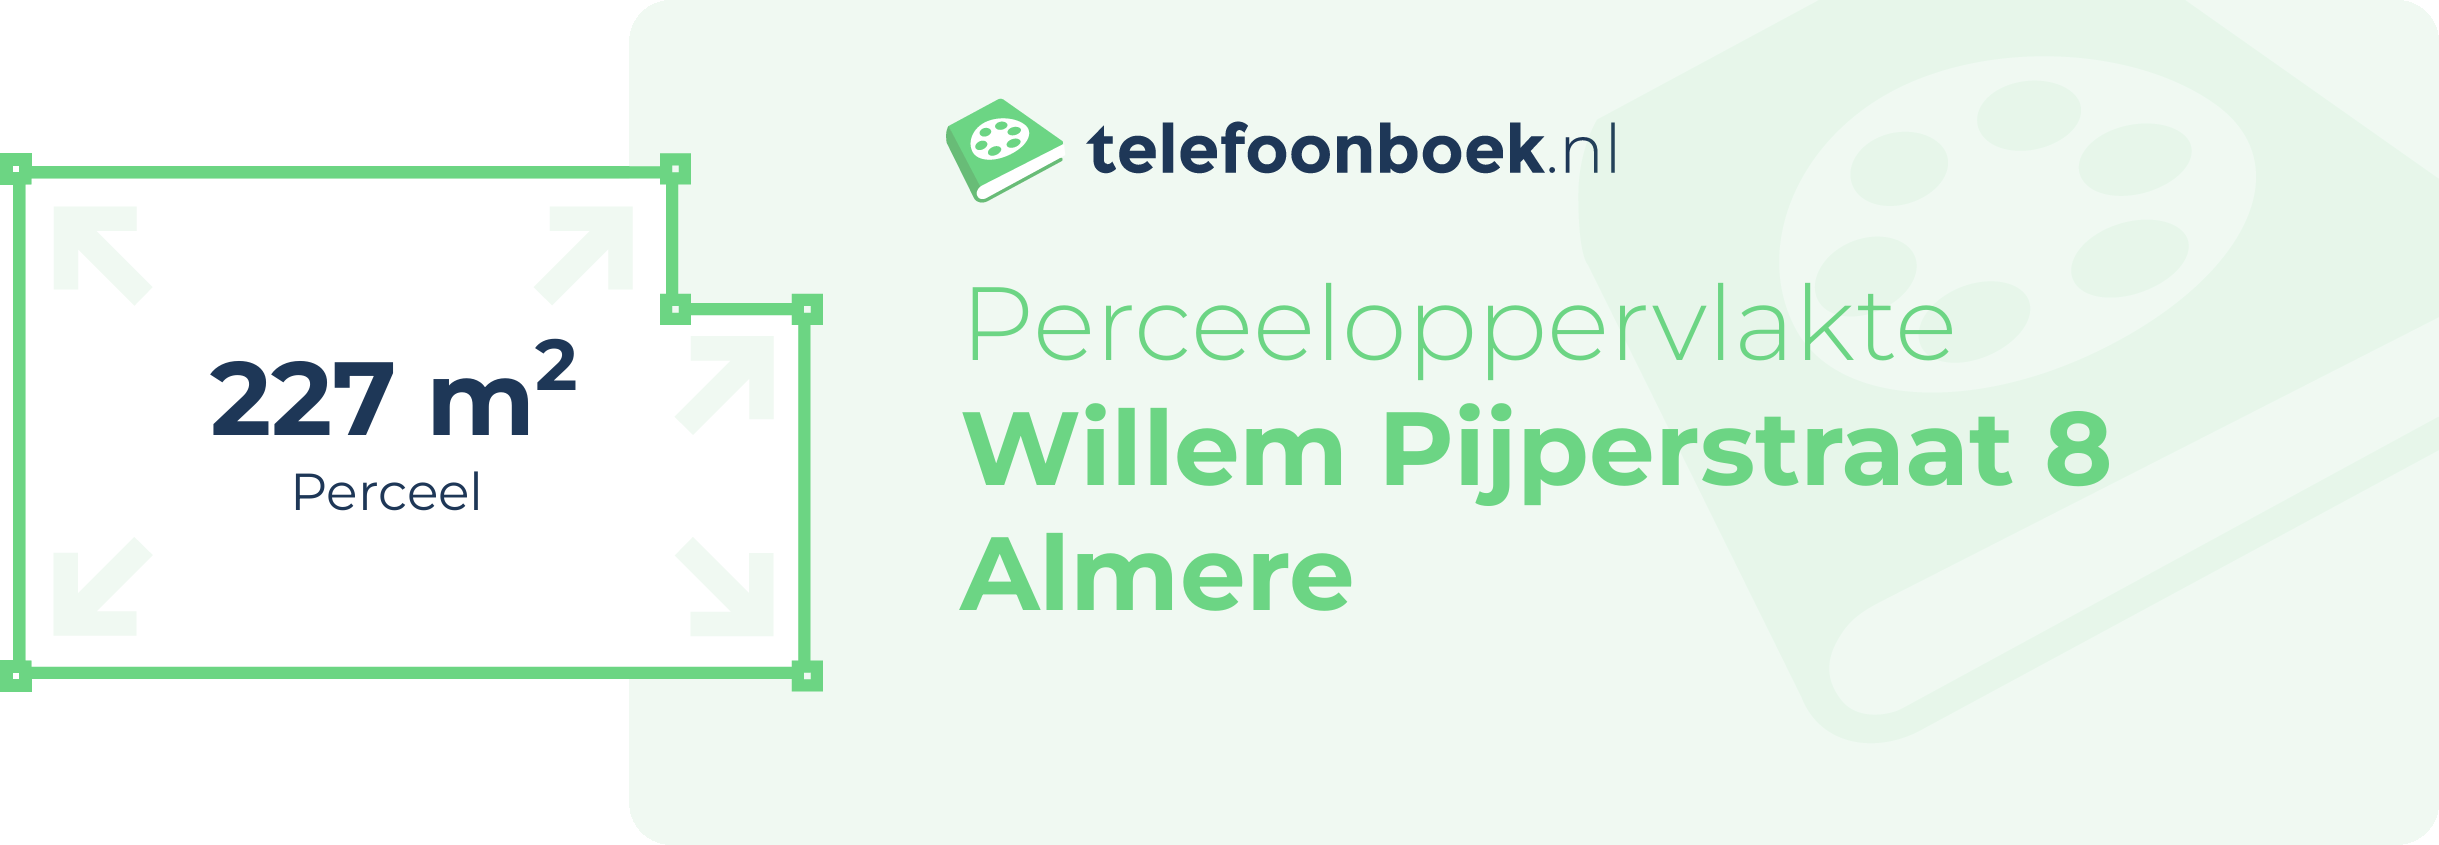 Perceeloppervlakte Willem Pijperstraat 8 Almere